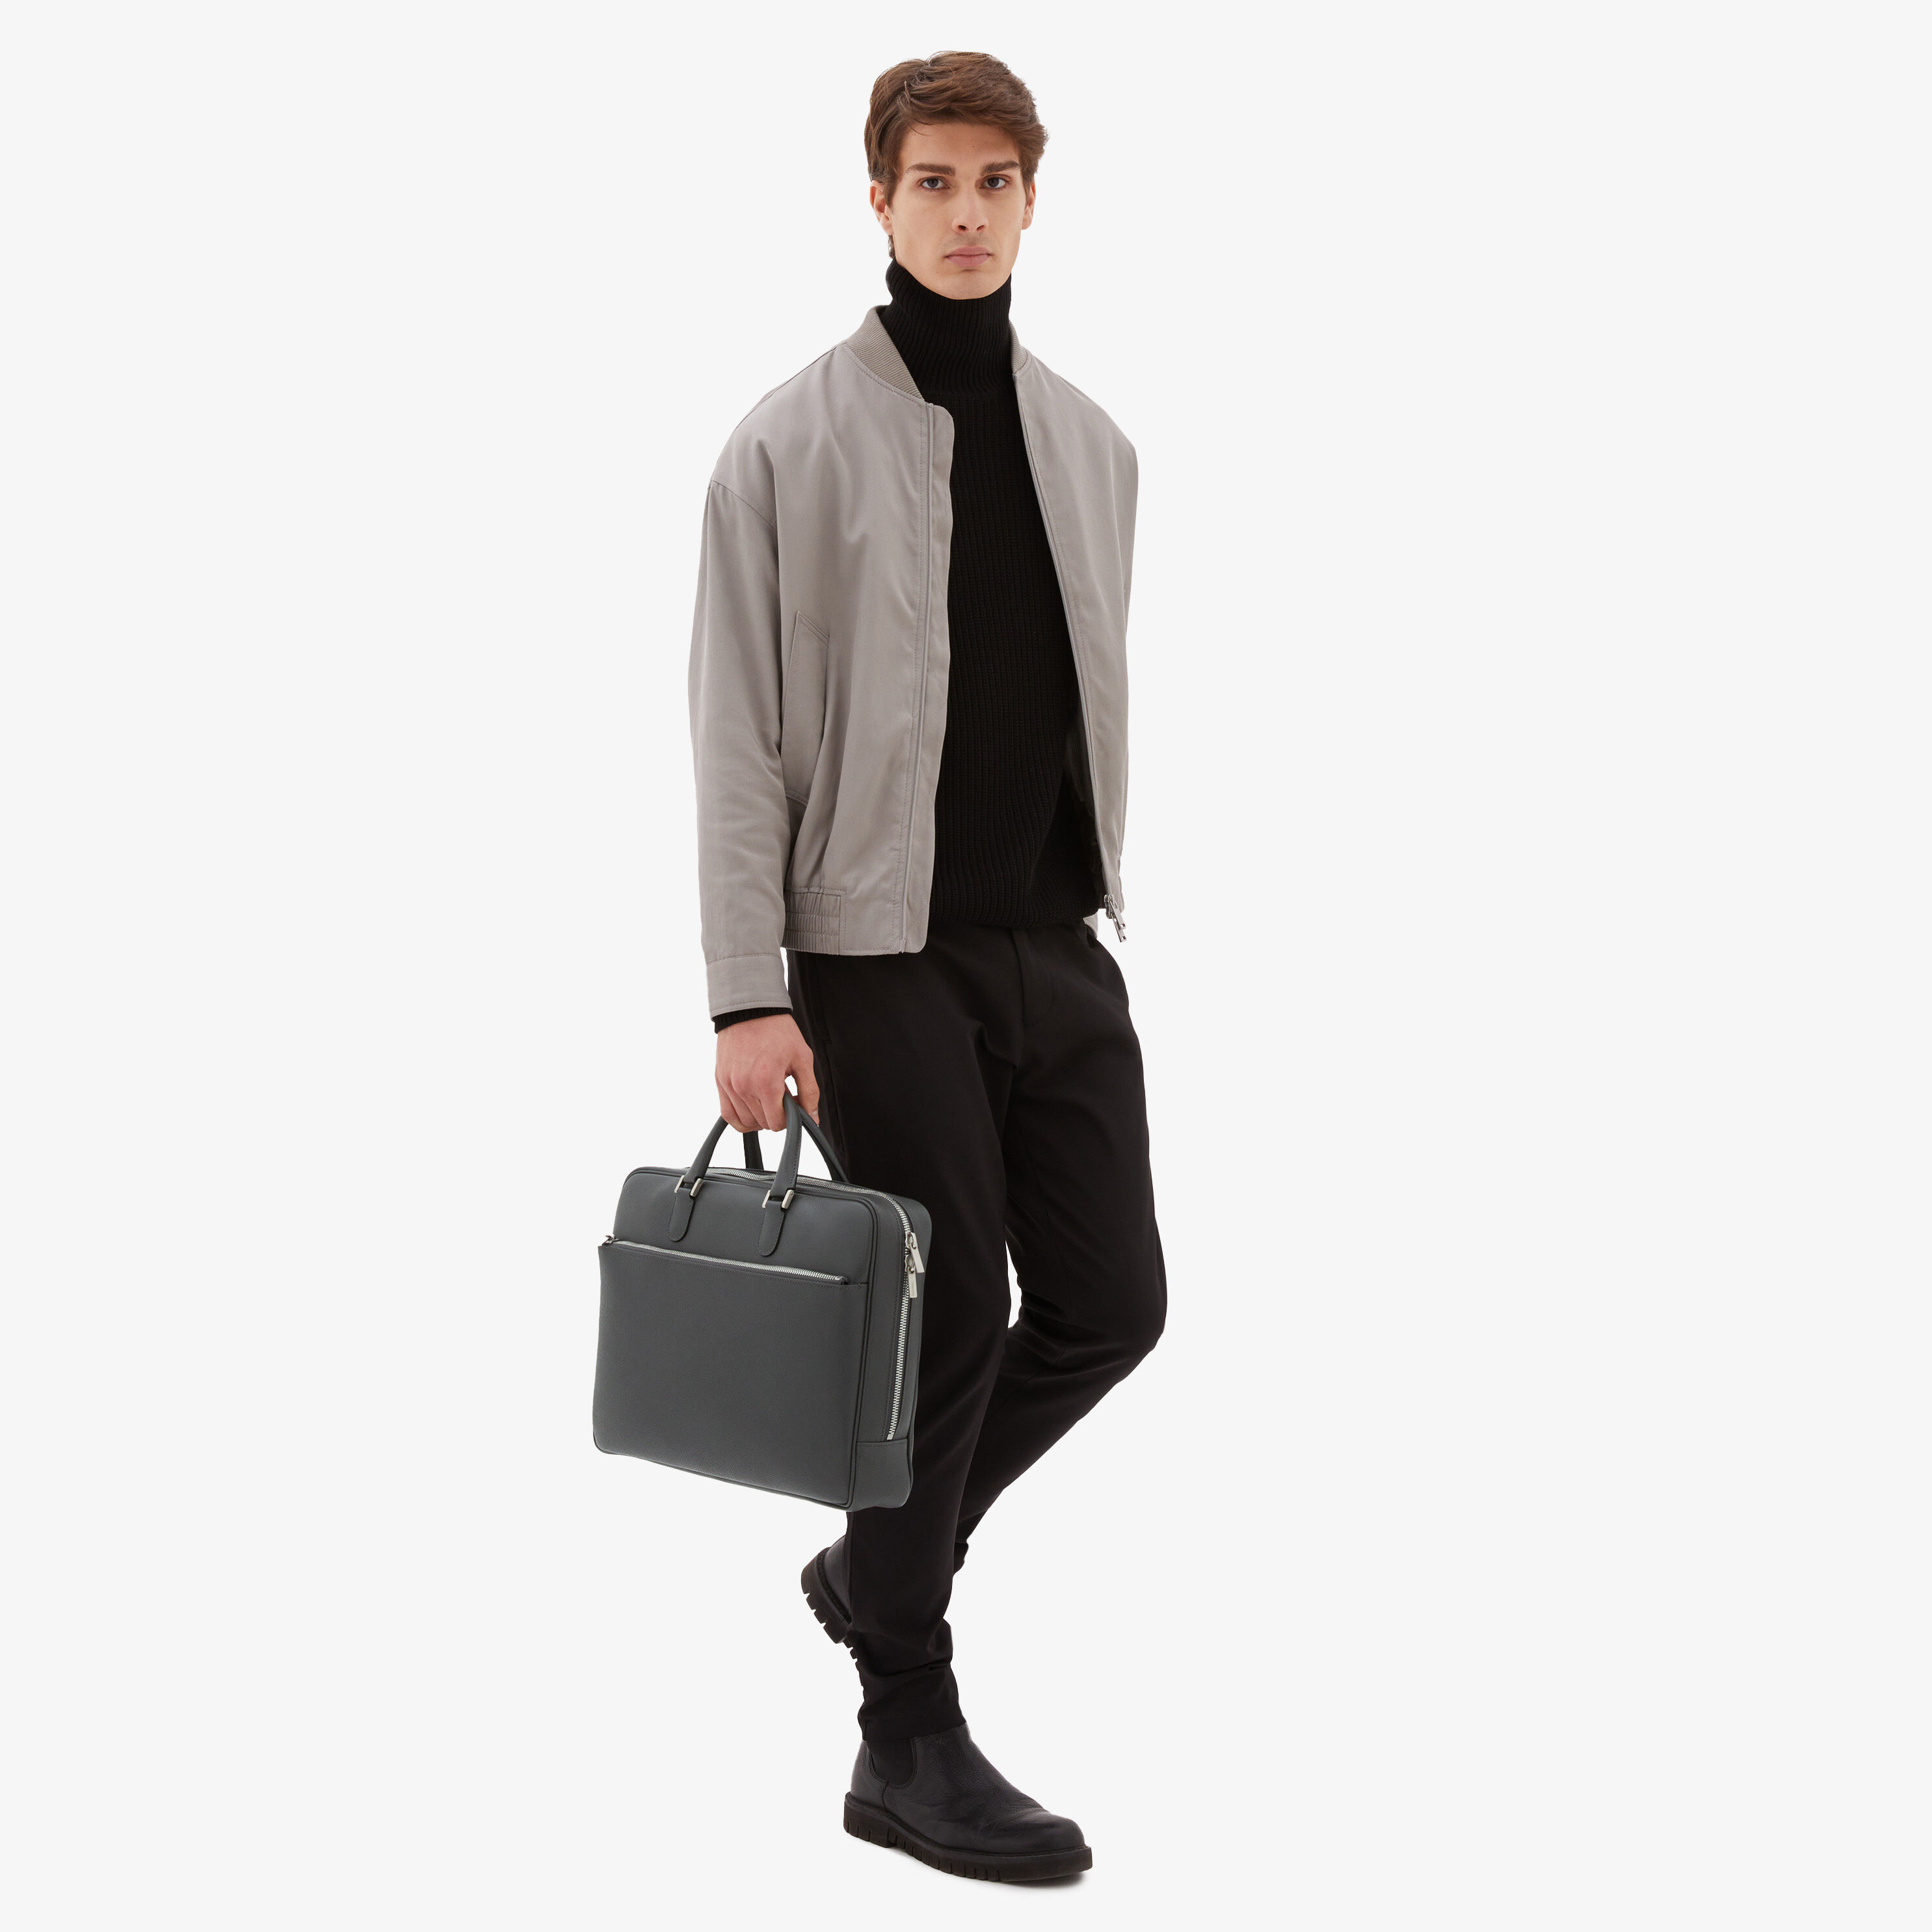 Gray Leather Medium business bag | Valextra Avietta